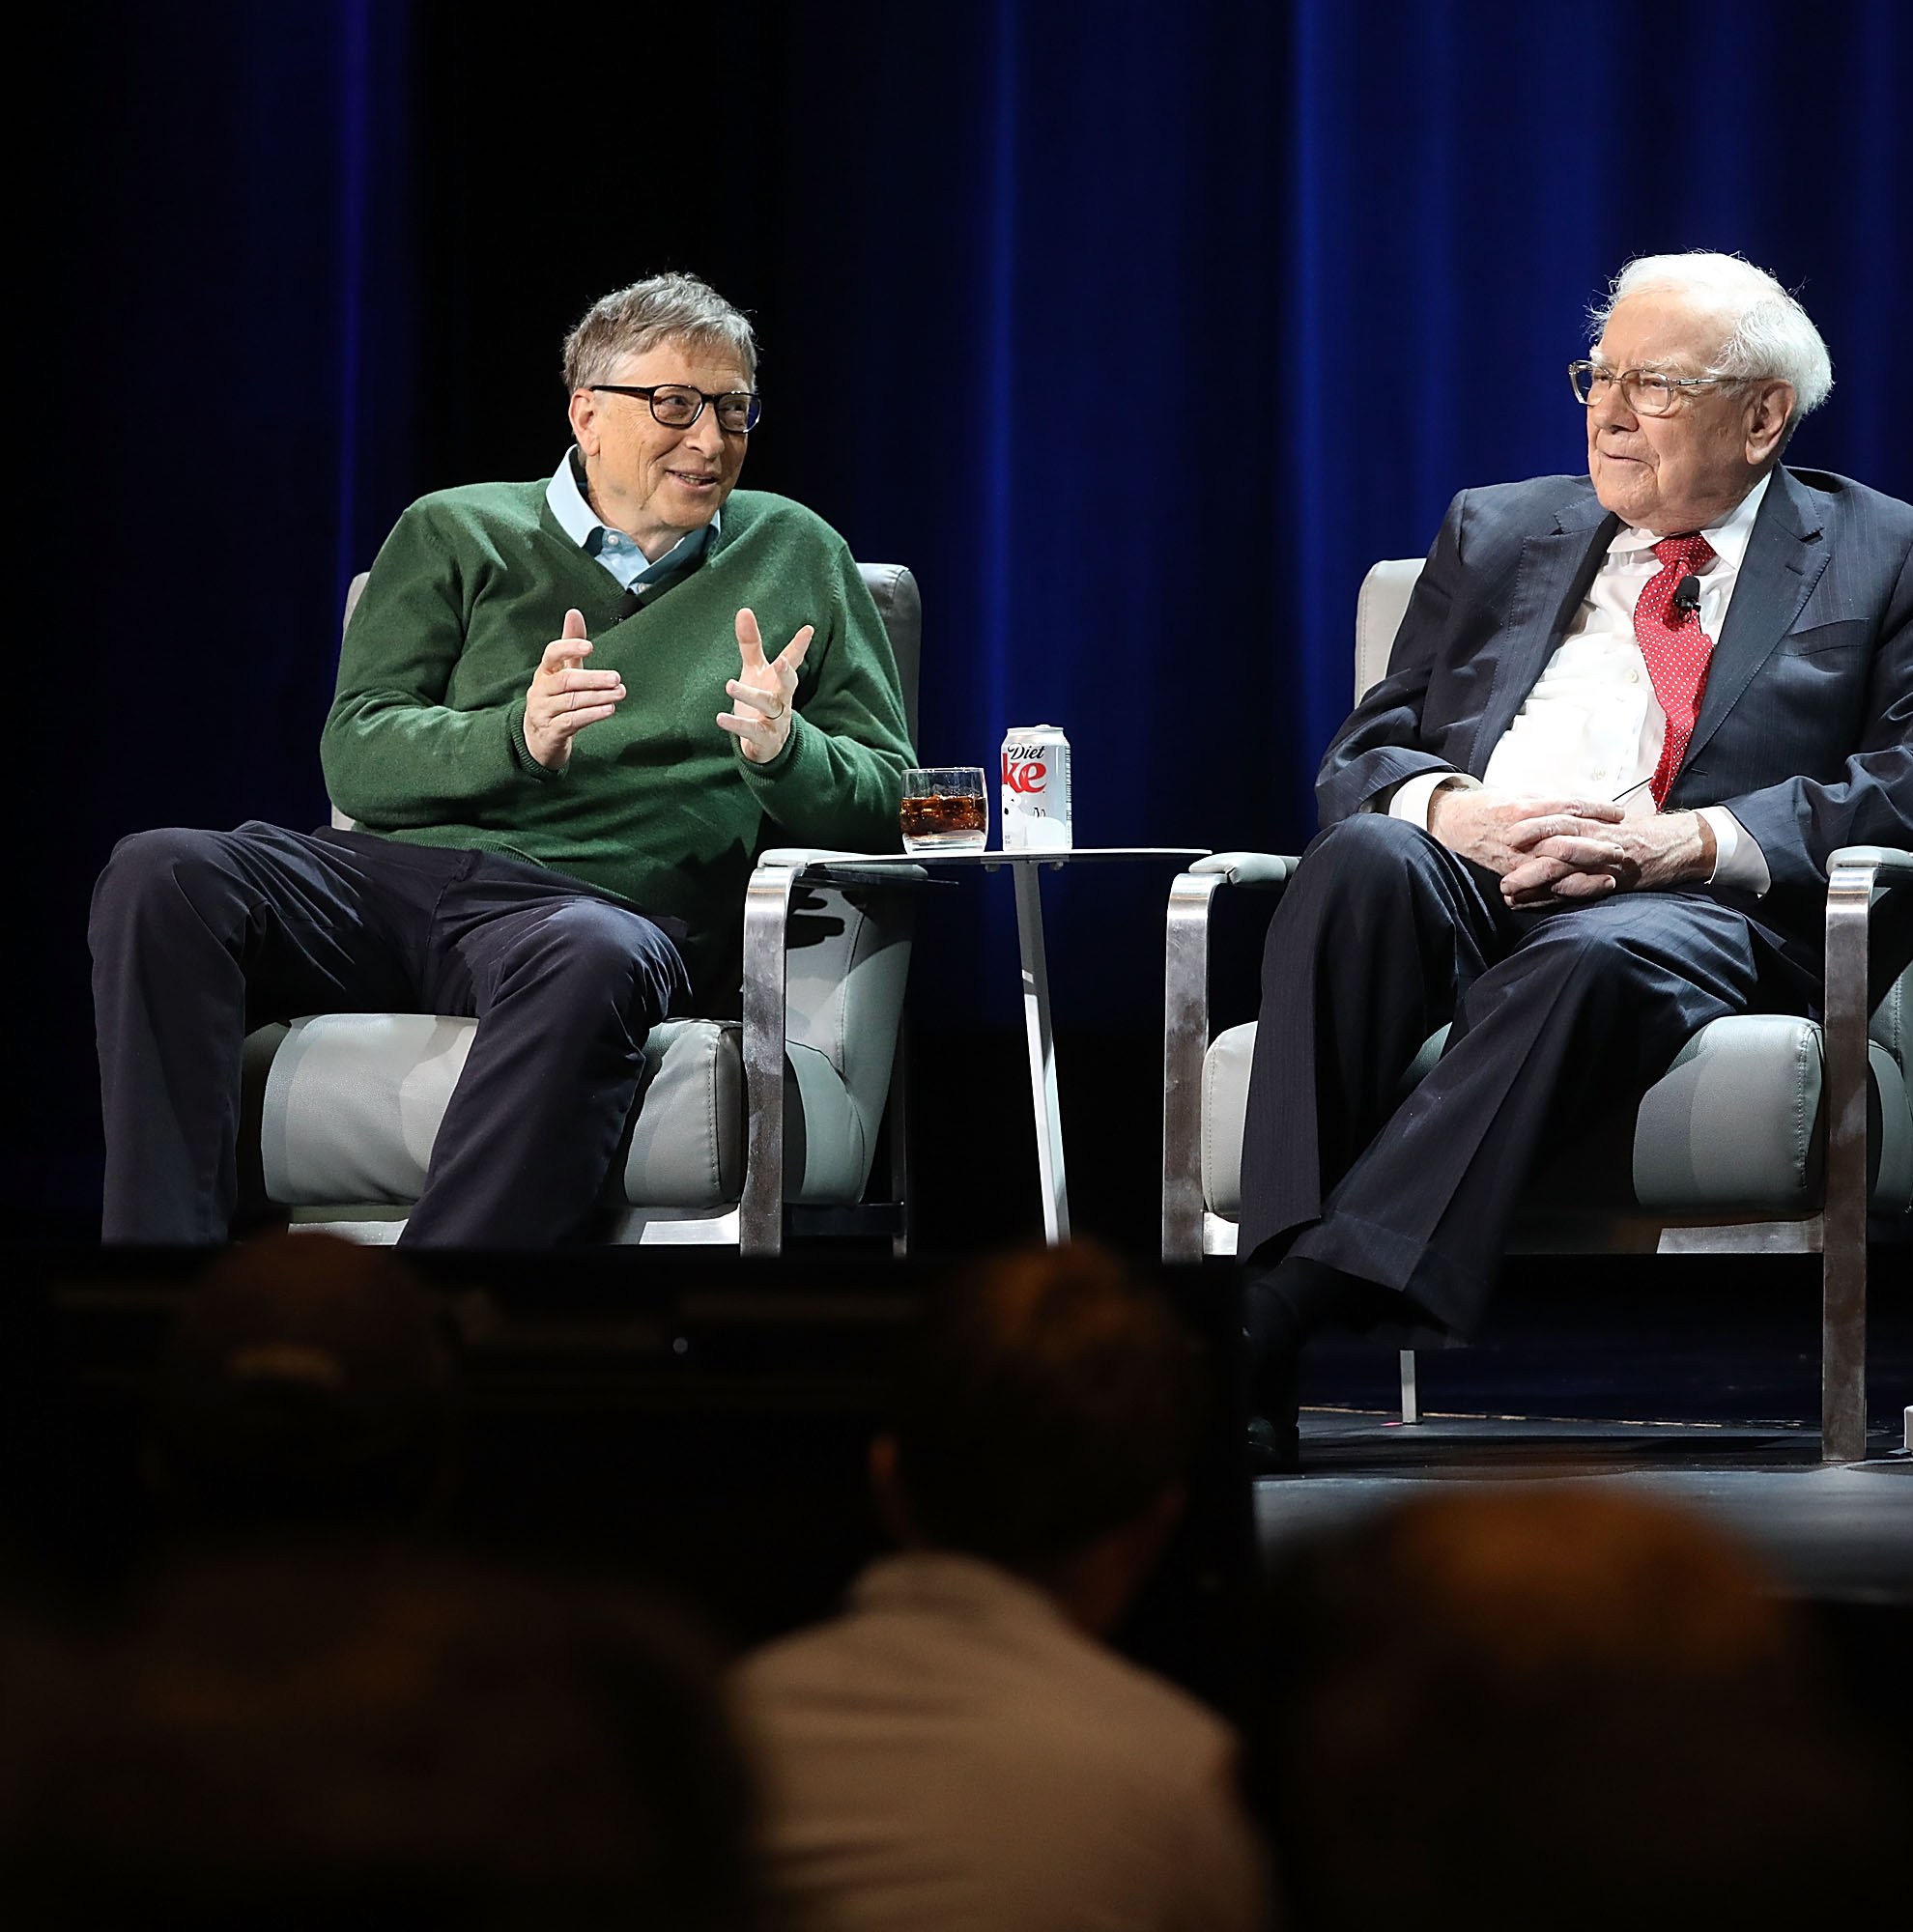 Warren Buffett’s breakup with the Gates Foundation will hurt the world